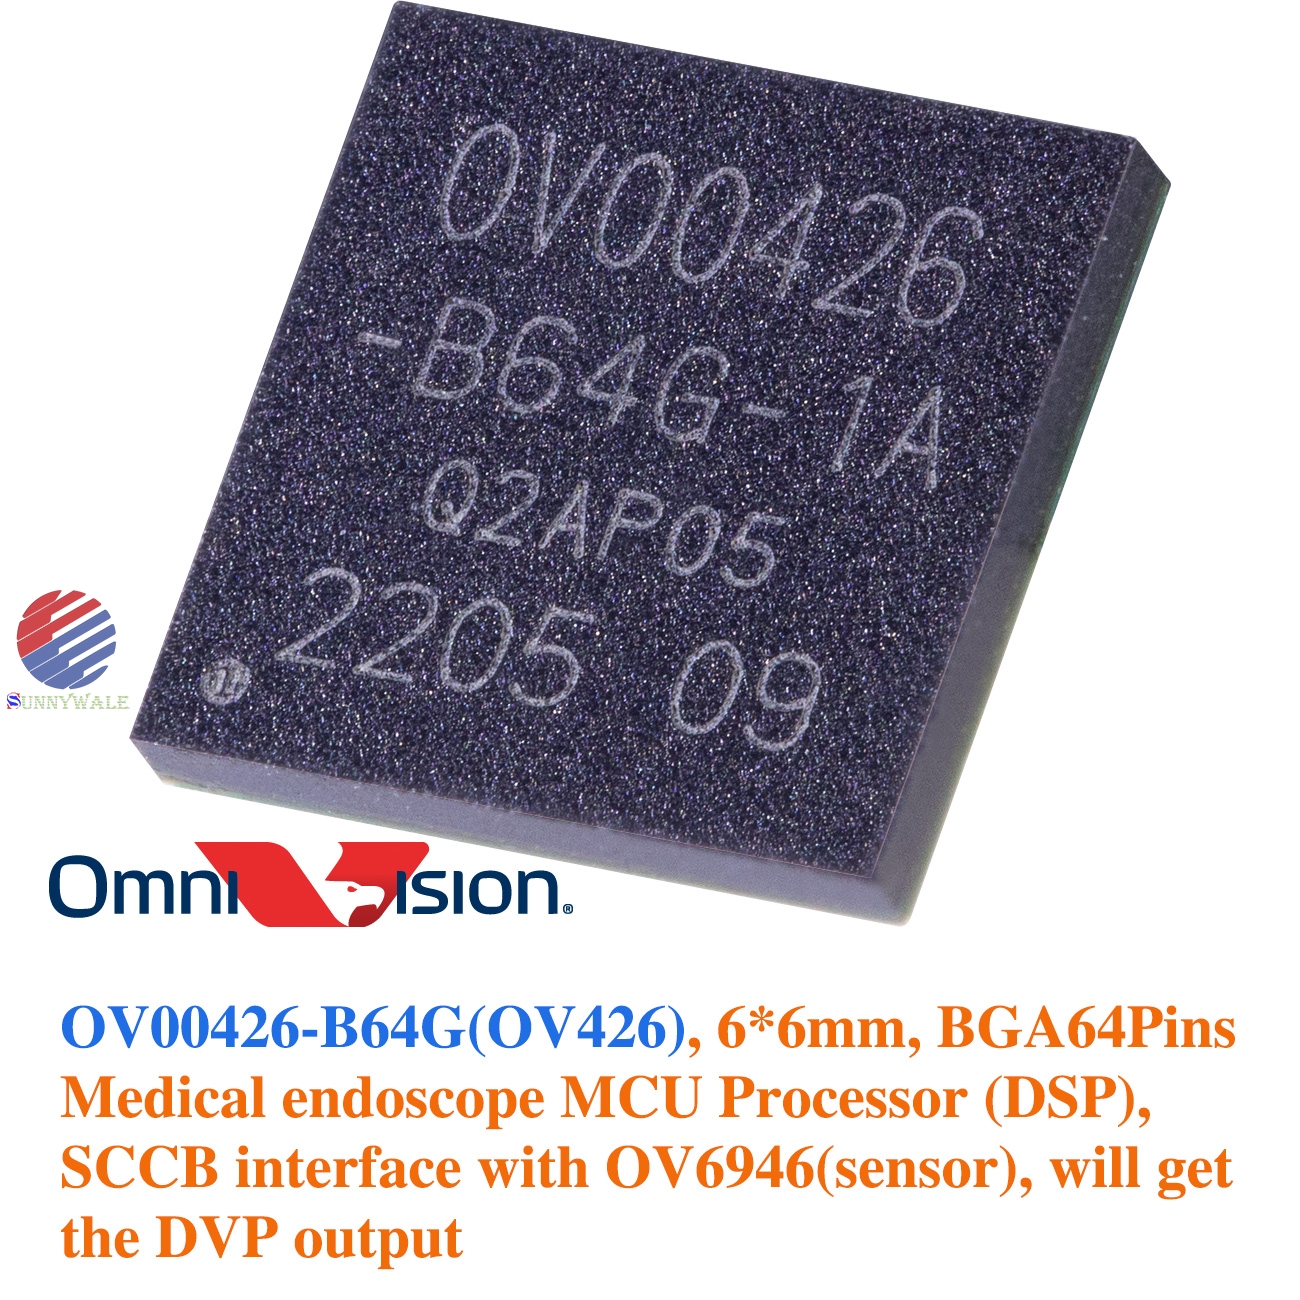 OV00426-B64G